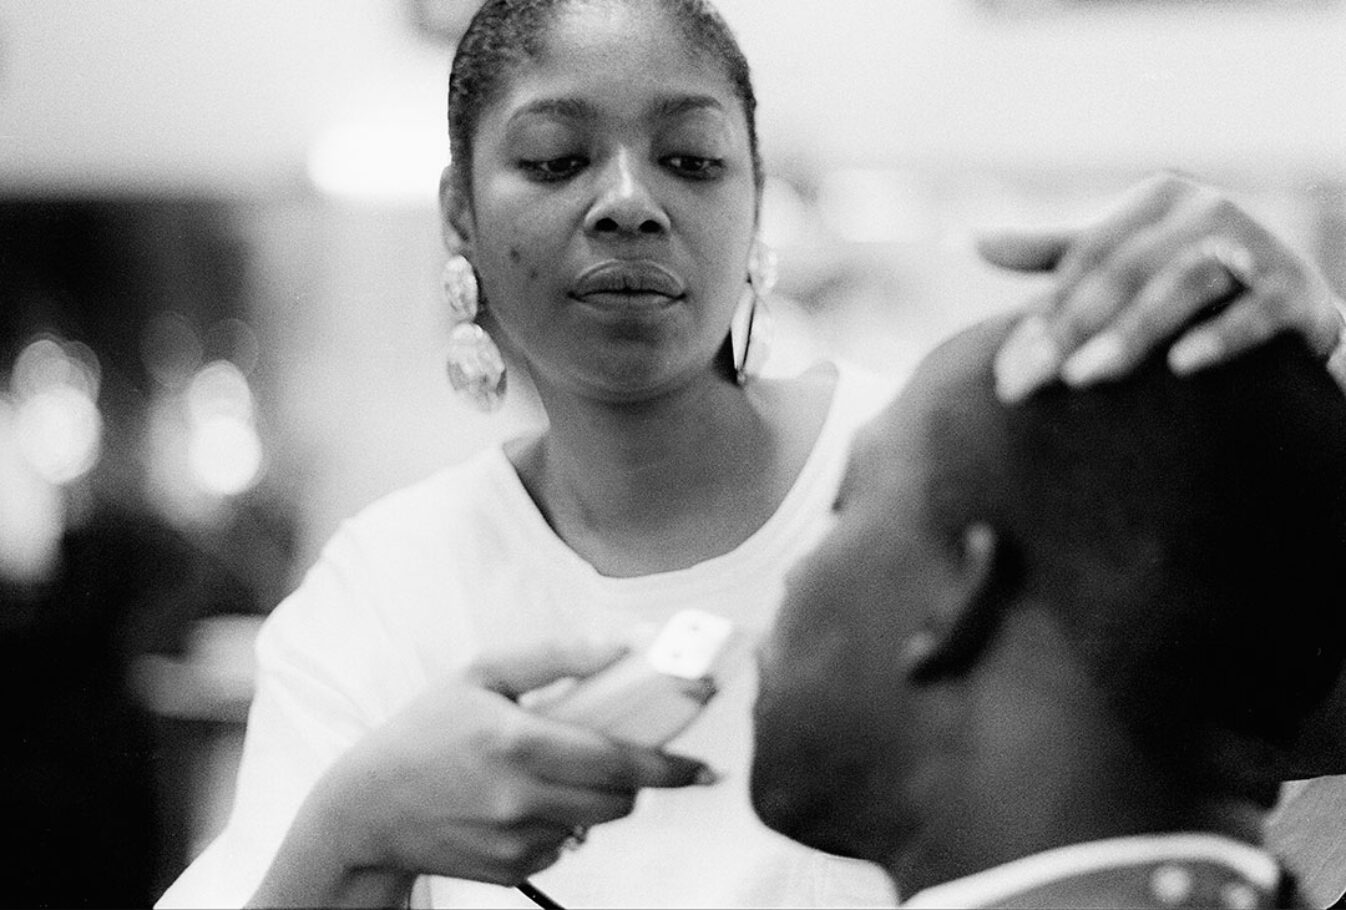 A woman barber trims a customer